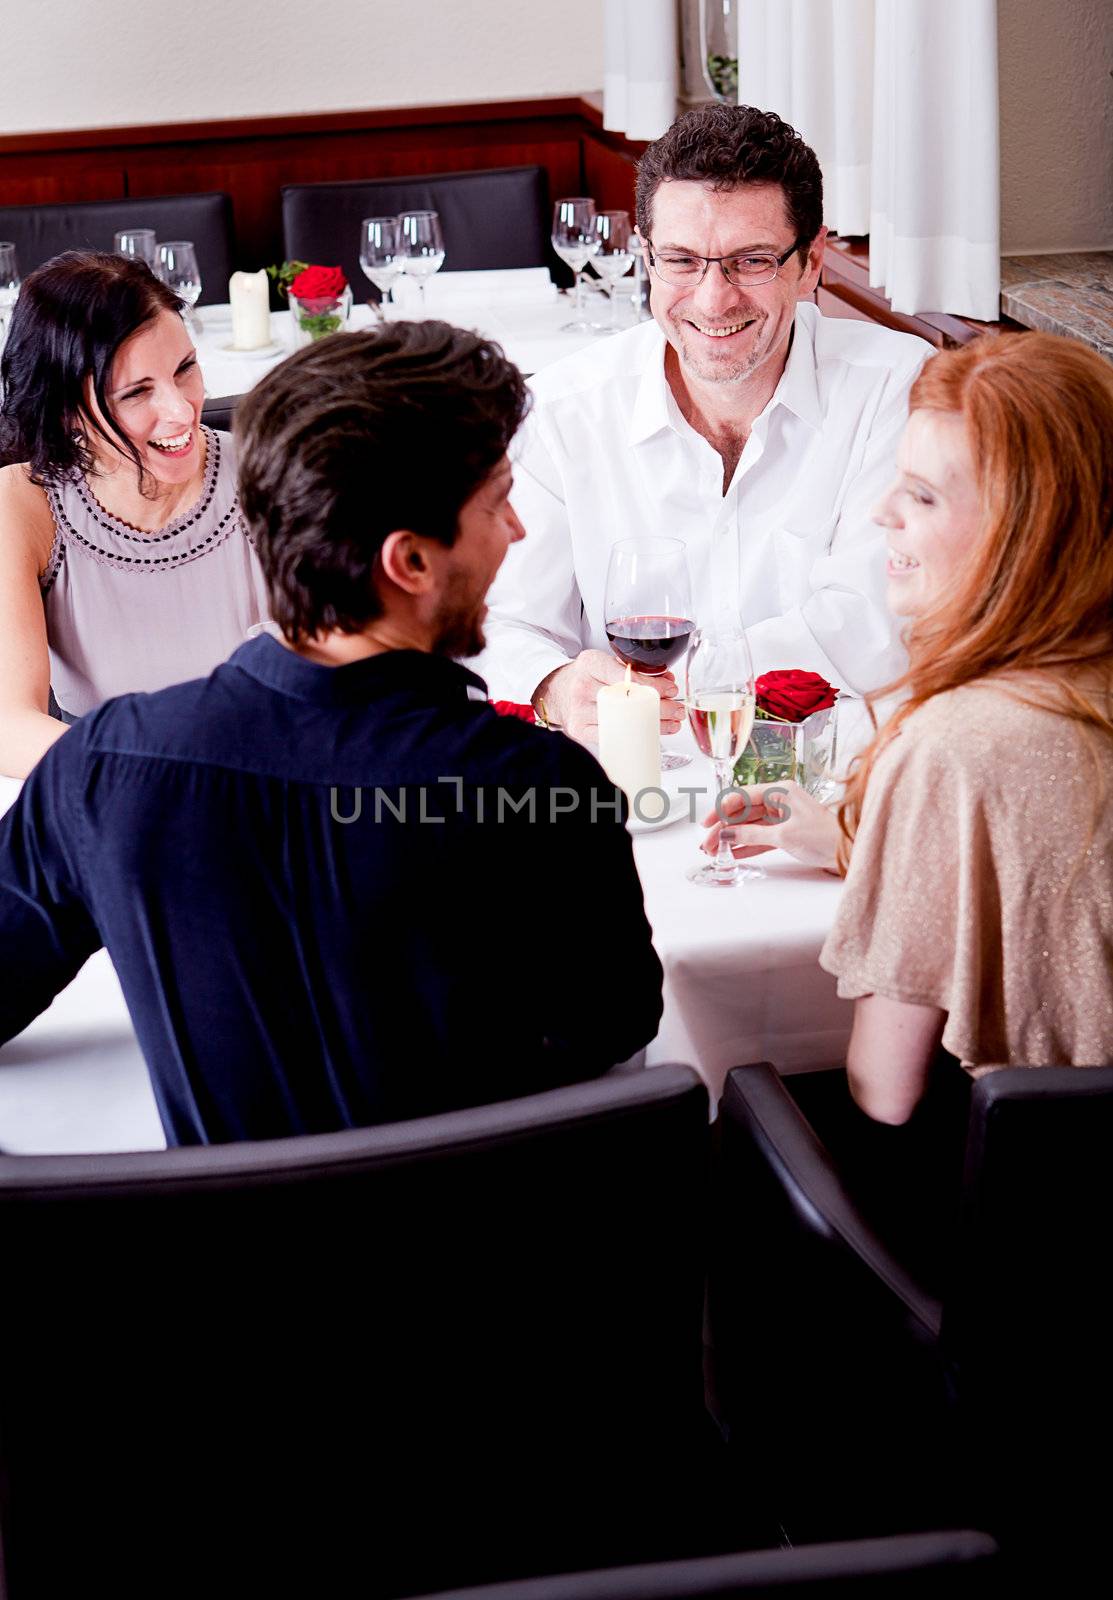 smiling happy people in restaurant by juniart